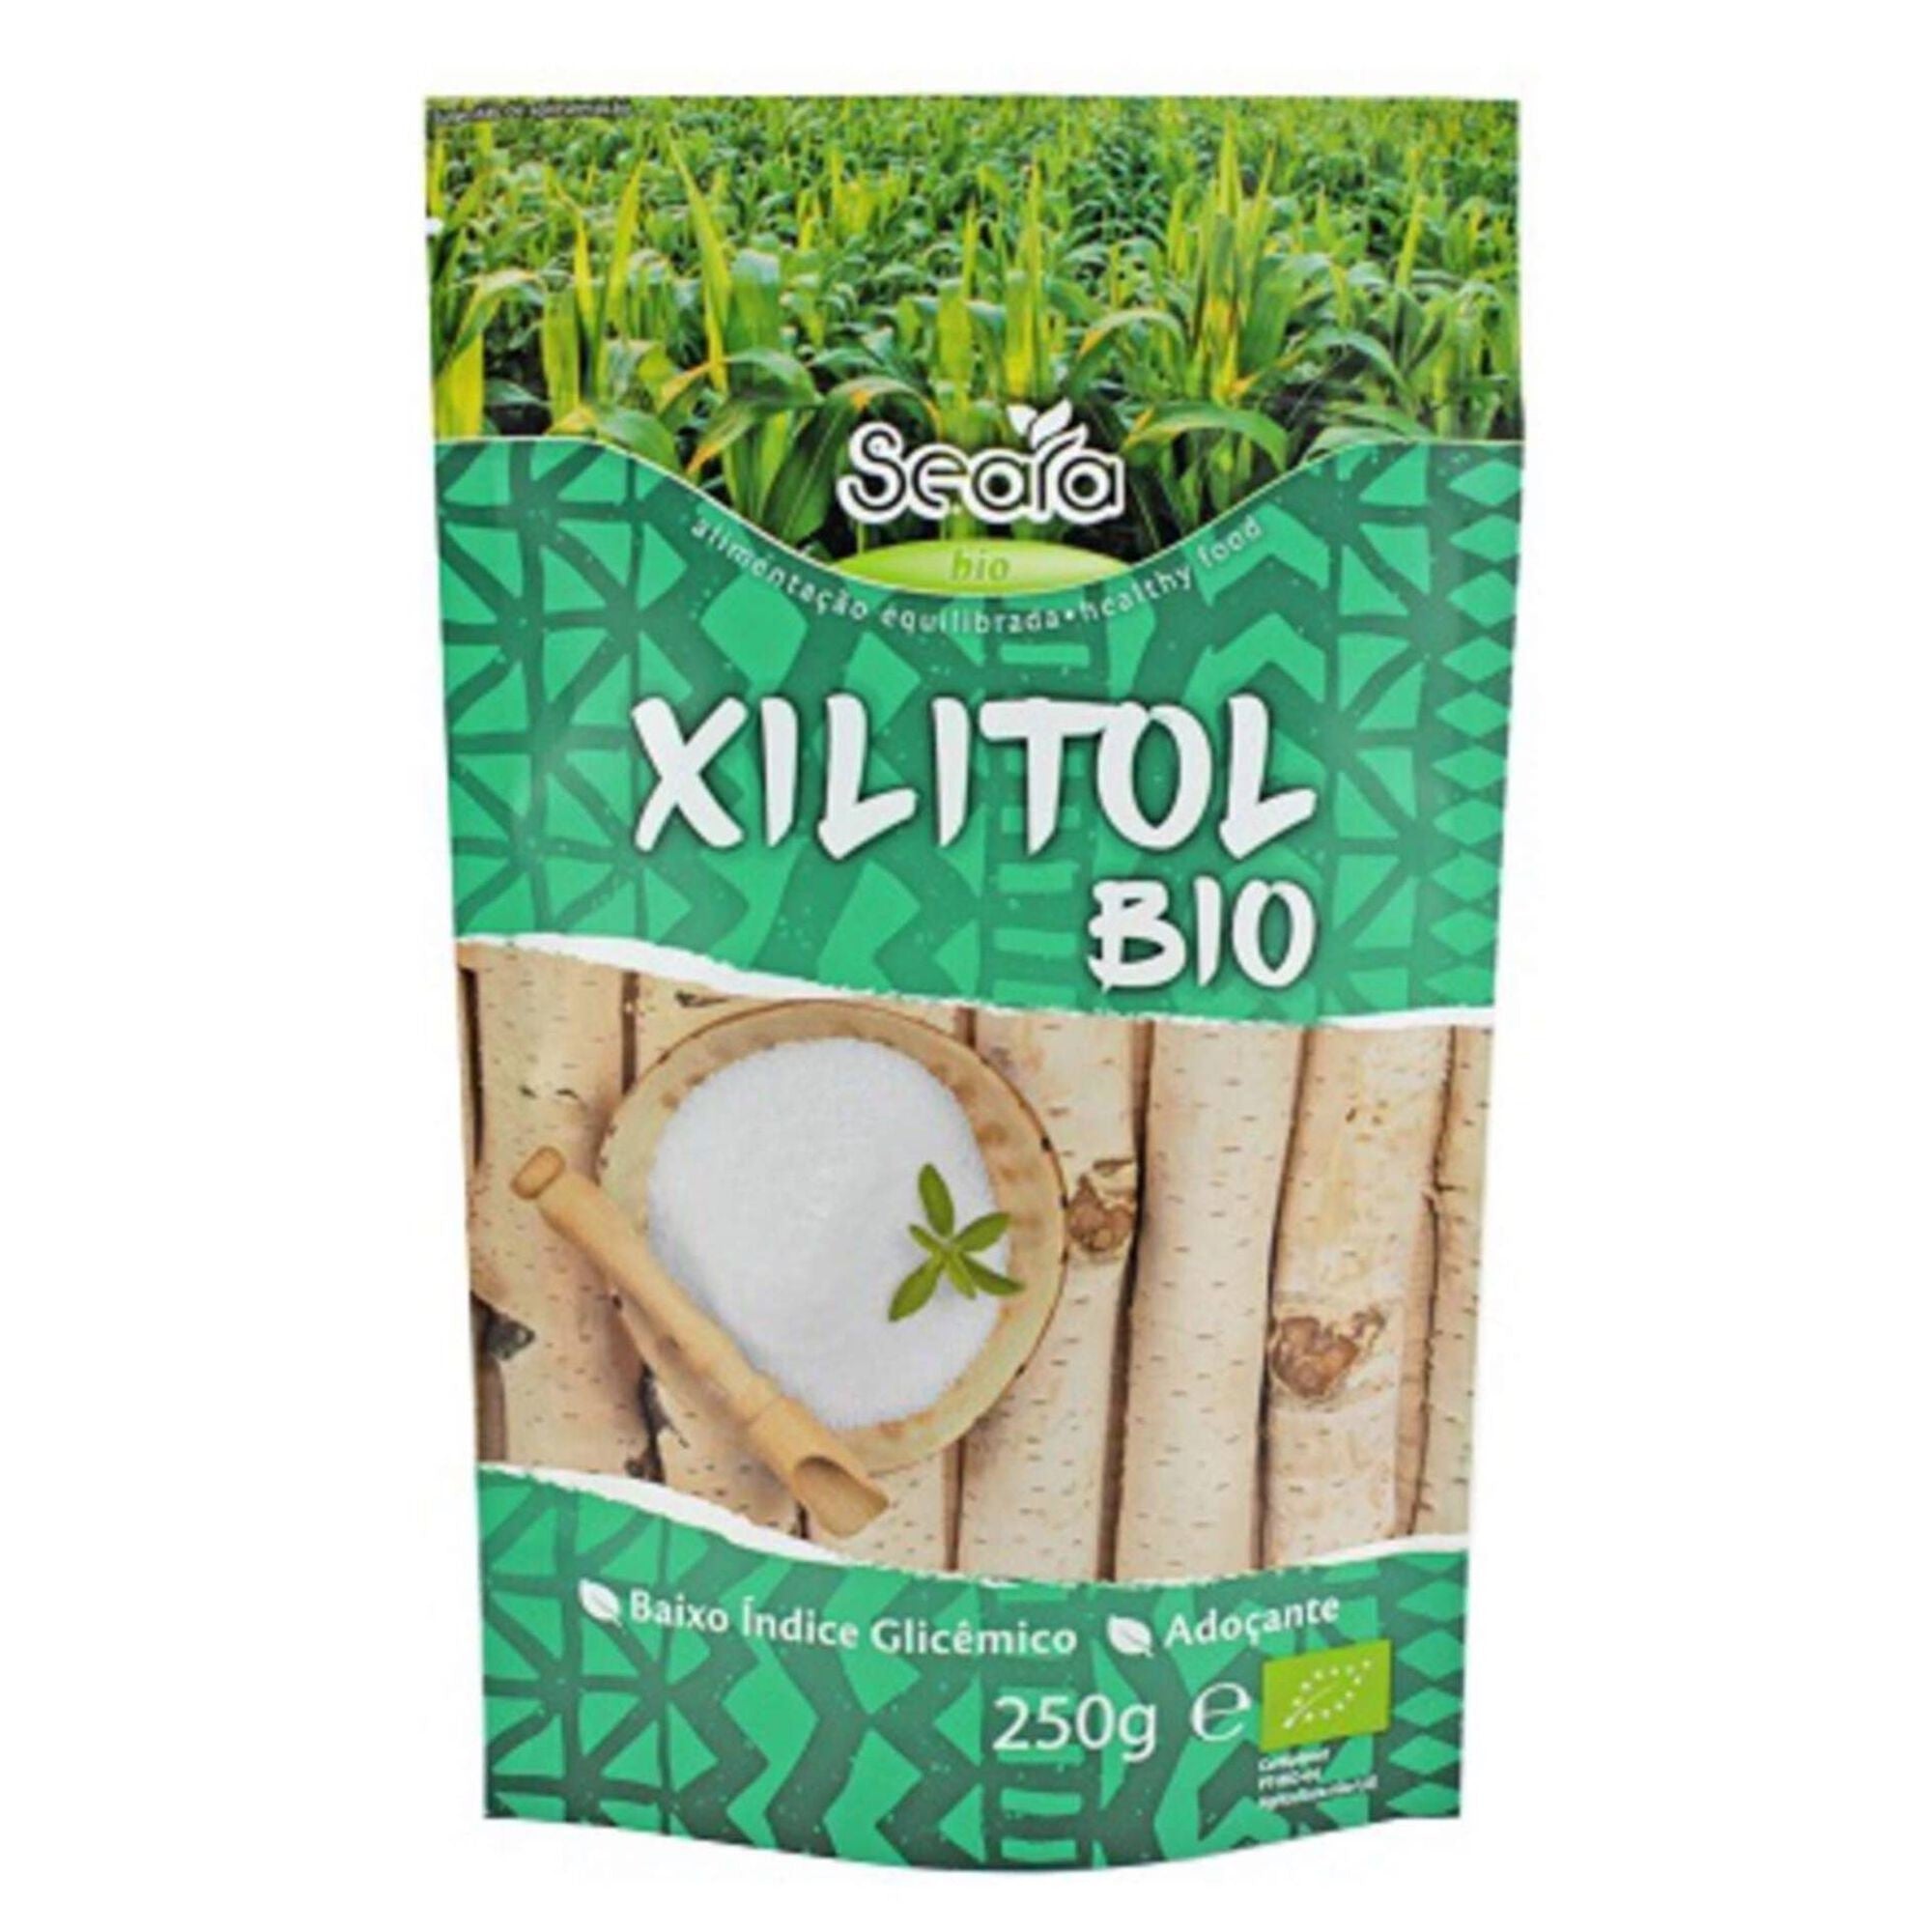 Xylitol Bio Seara 250 g